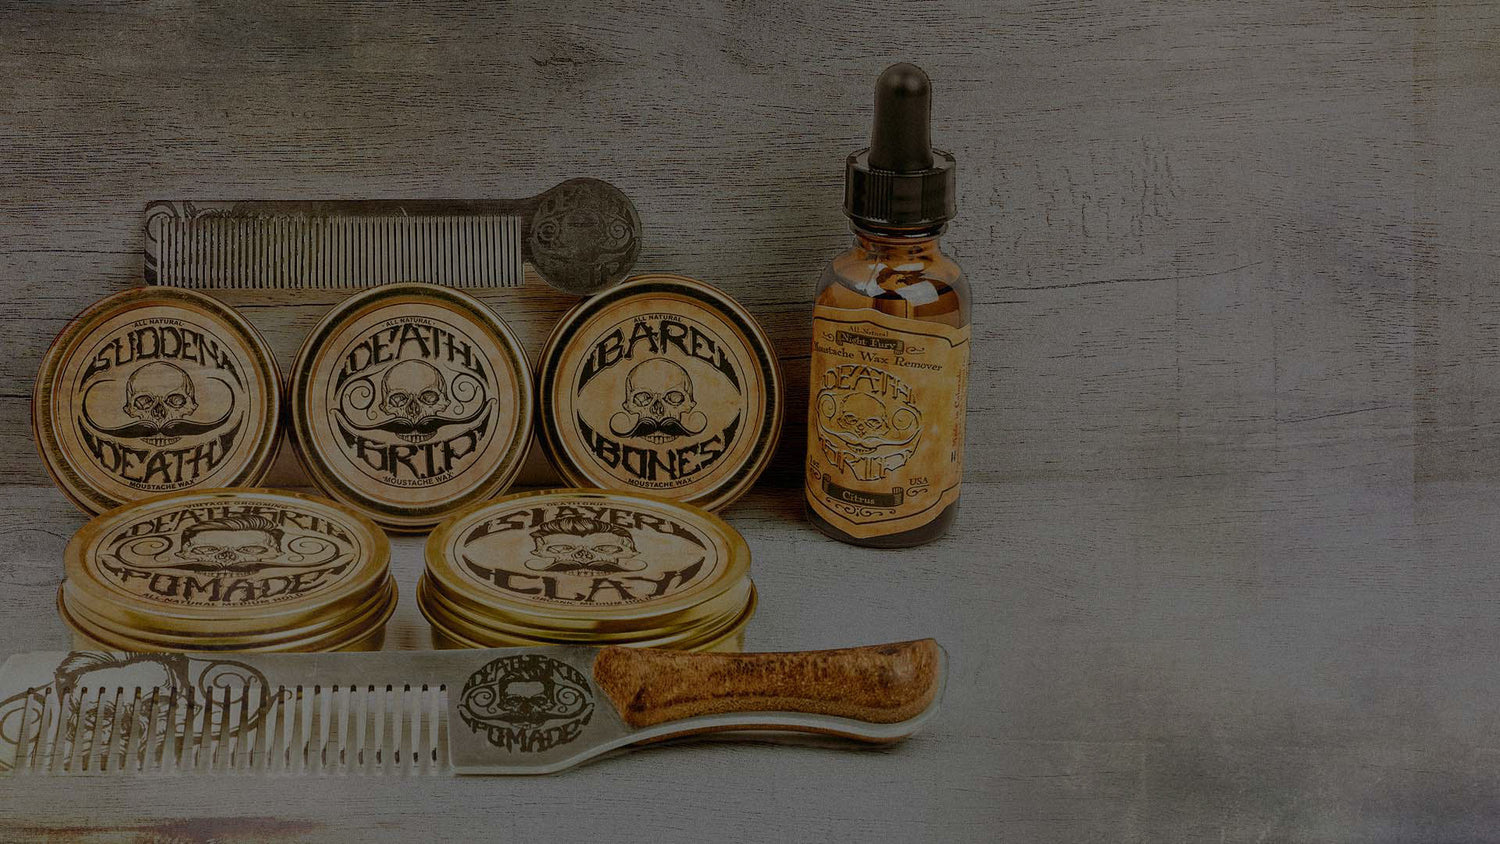 handlebar mustache wax by Death Grip Wax a Men's Grooming Company